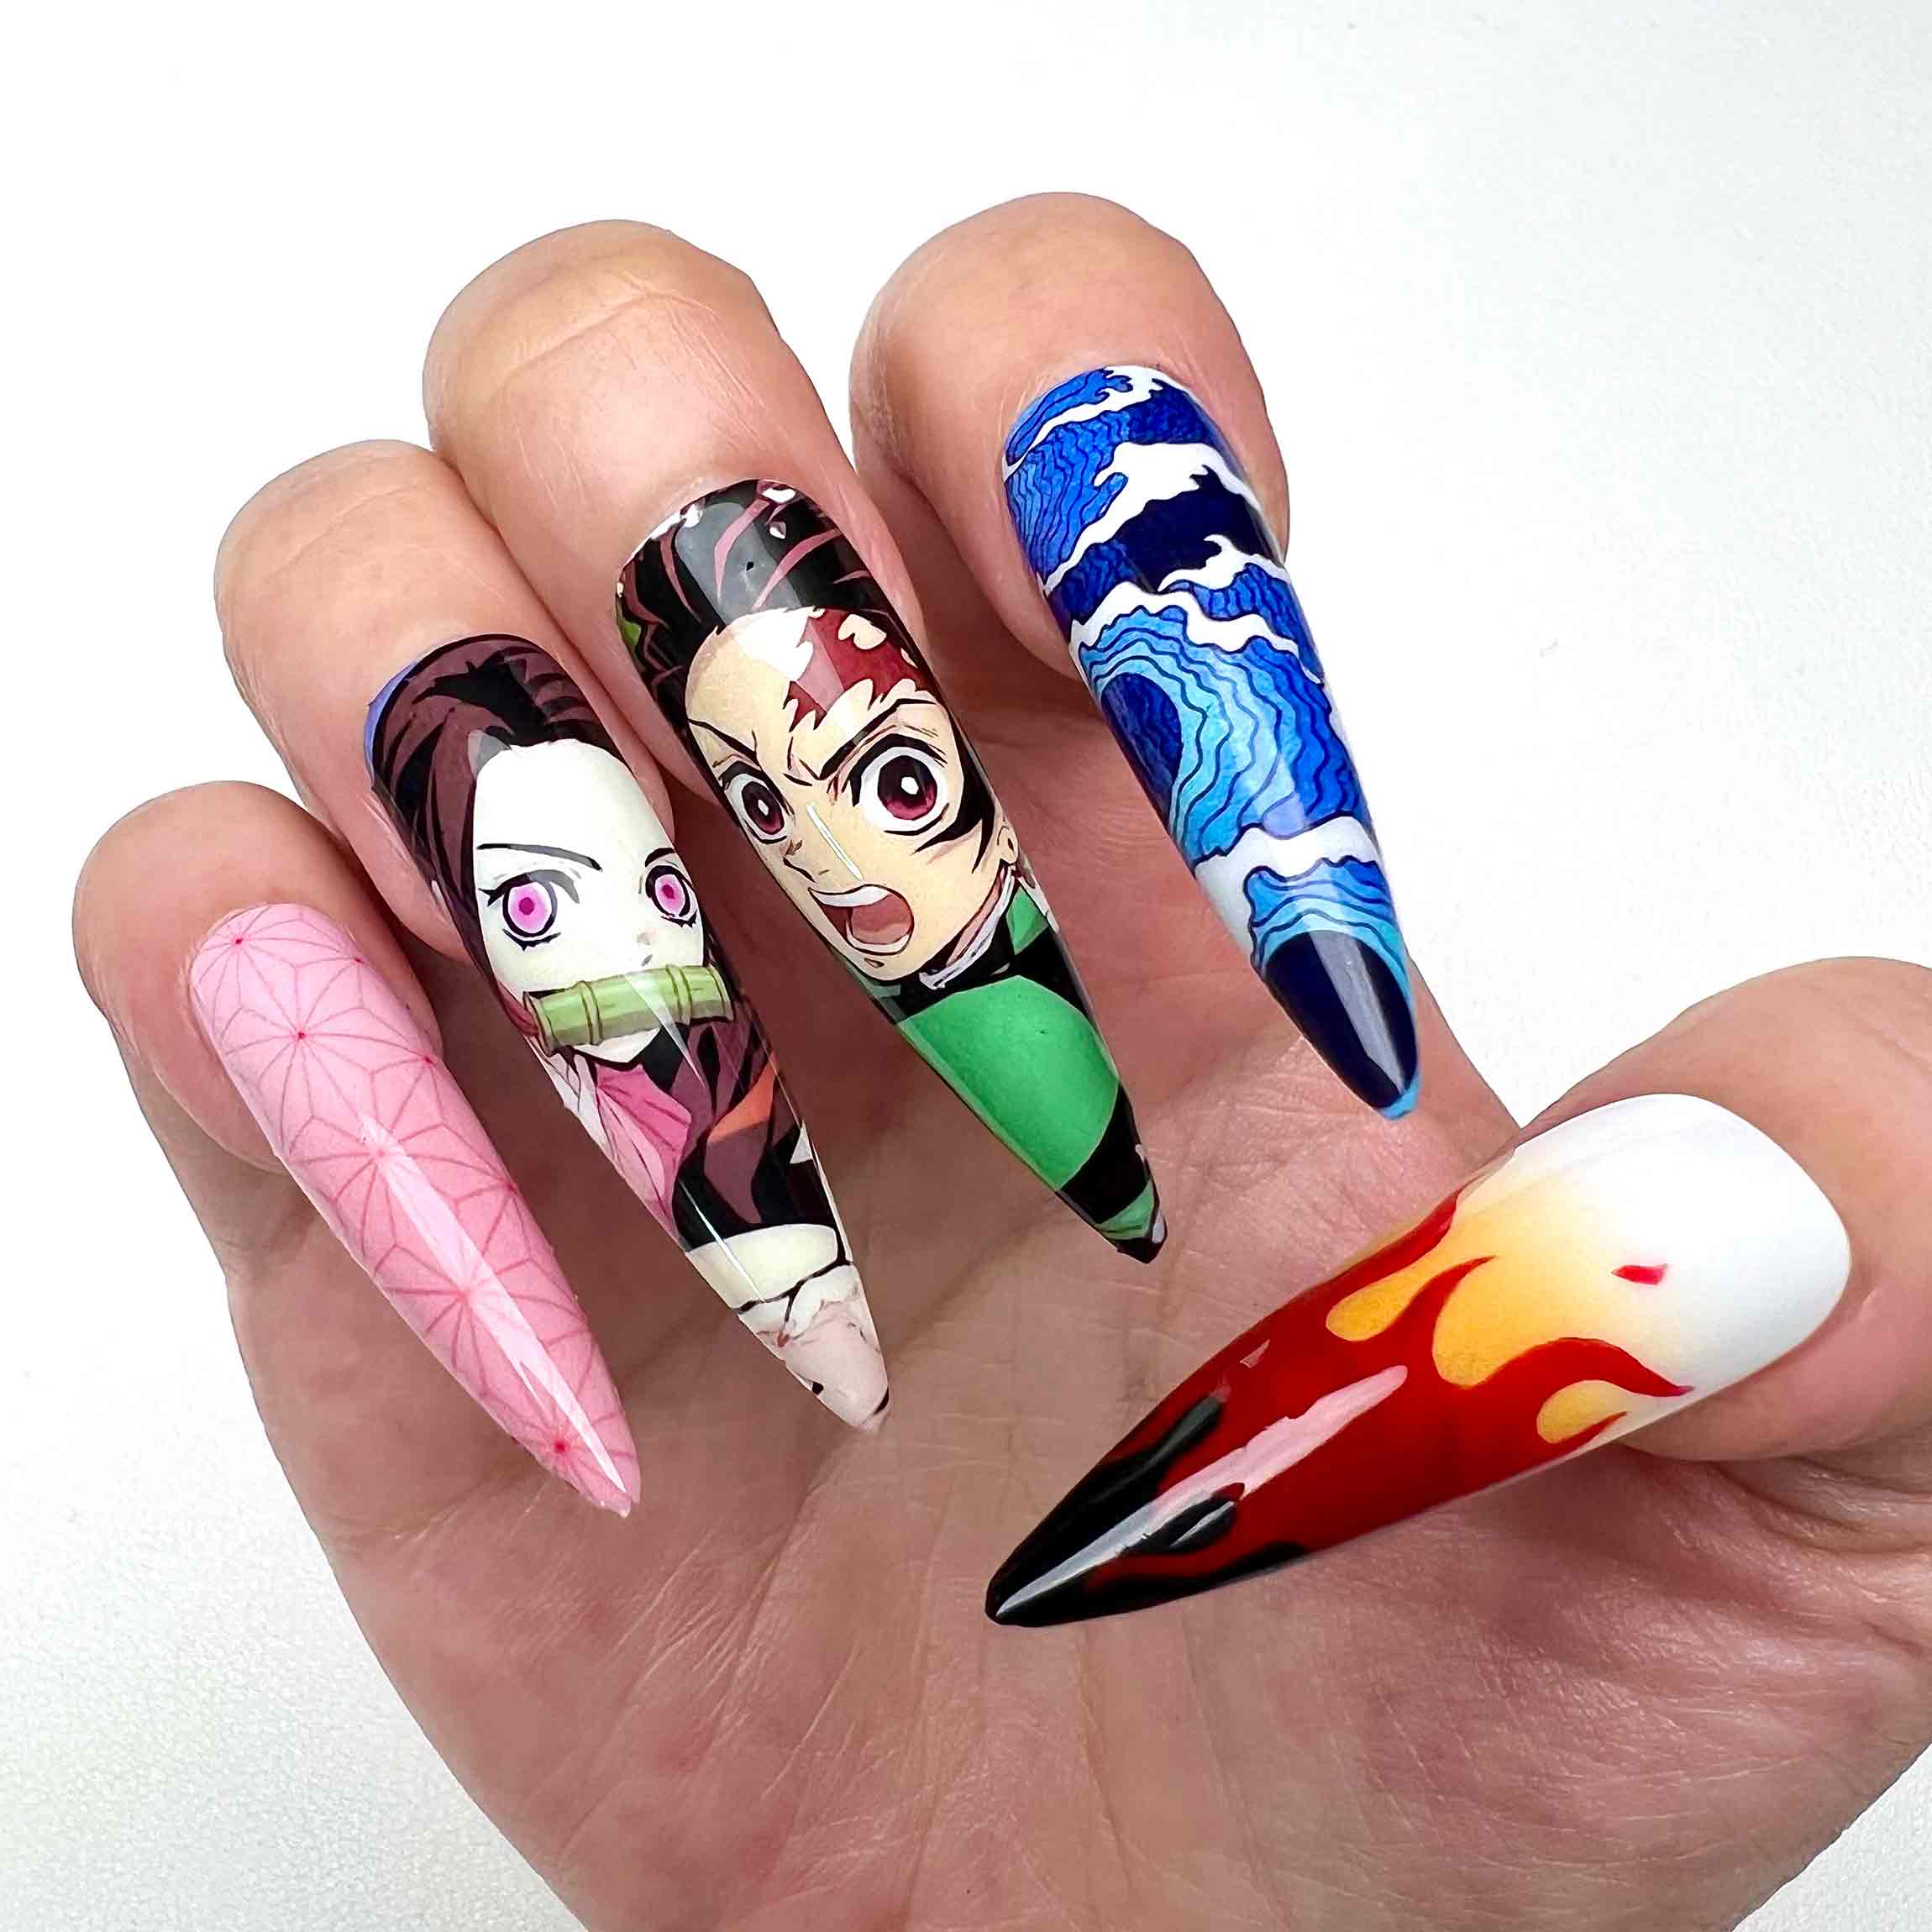 Anime Inspired Nail Art To Try This Season | Femina.in